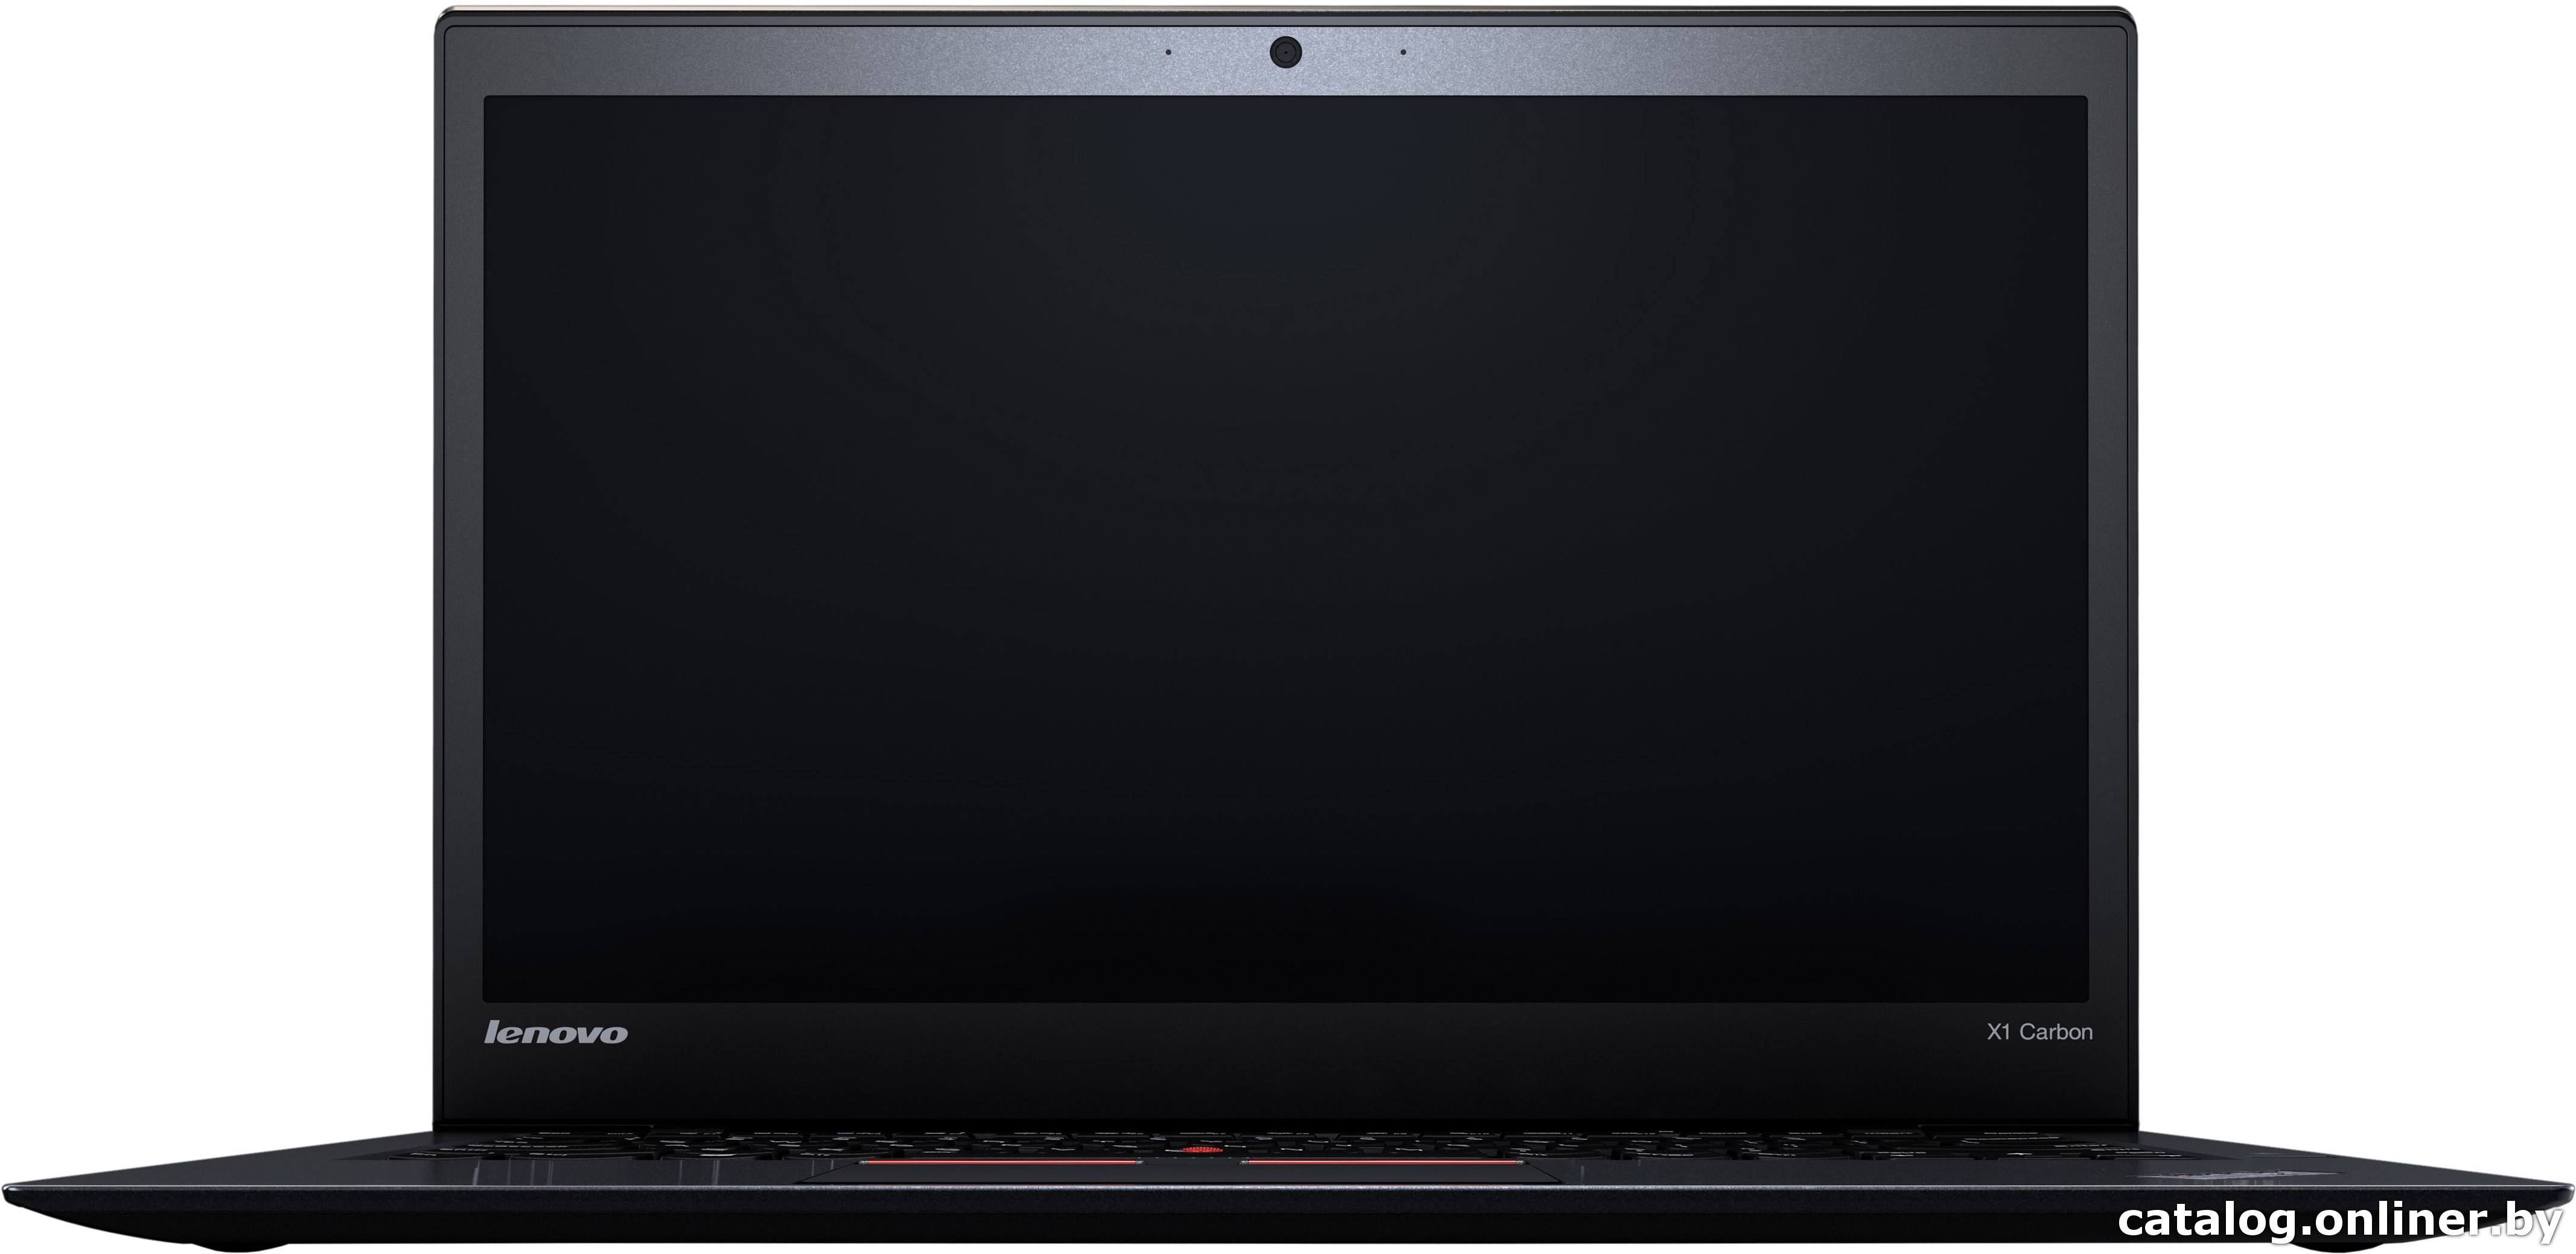 Замена клавиатуры Lenovo ThinkPad X1 Carbon 3